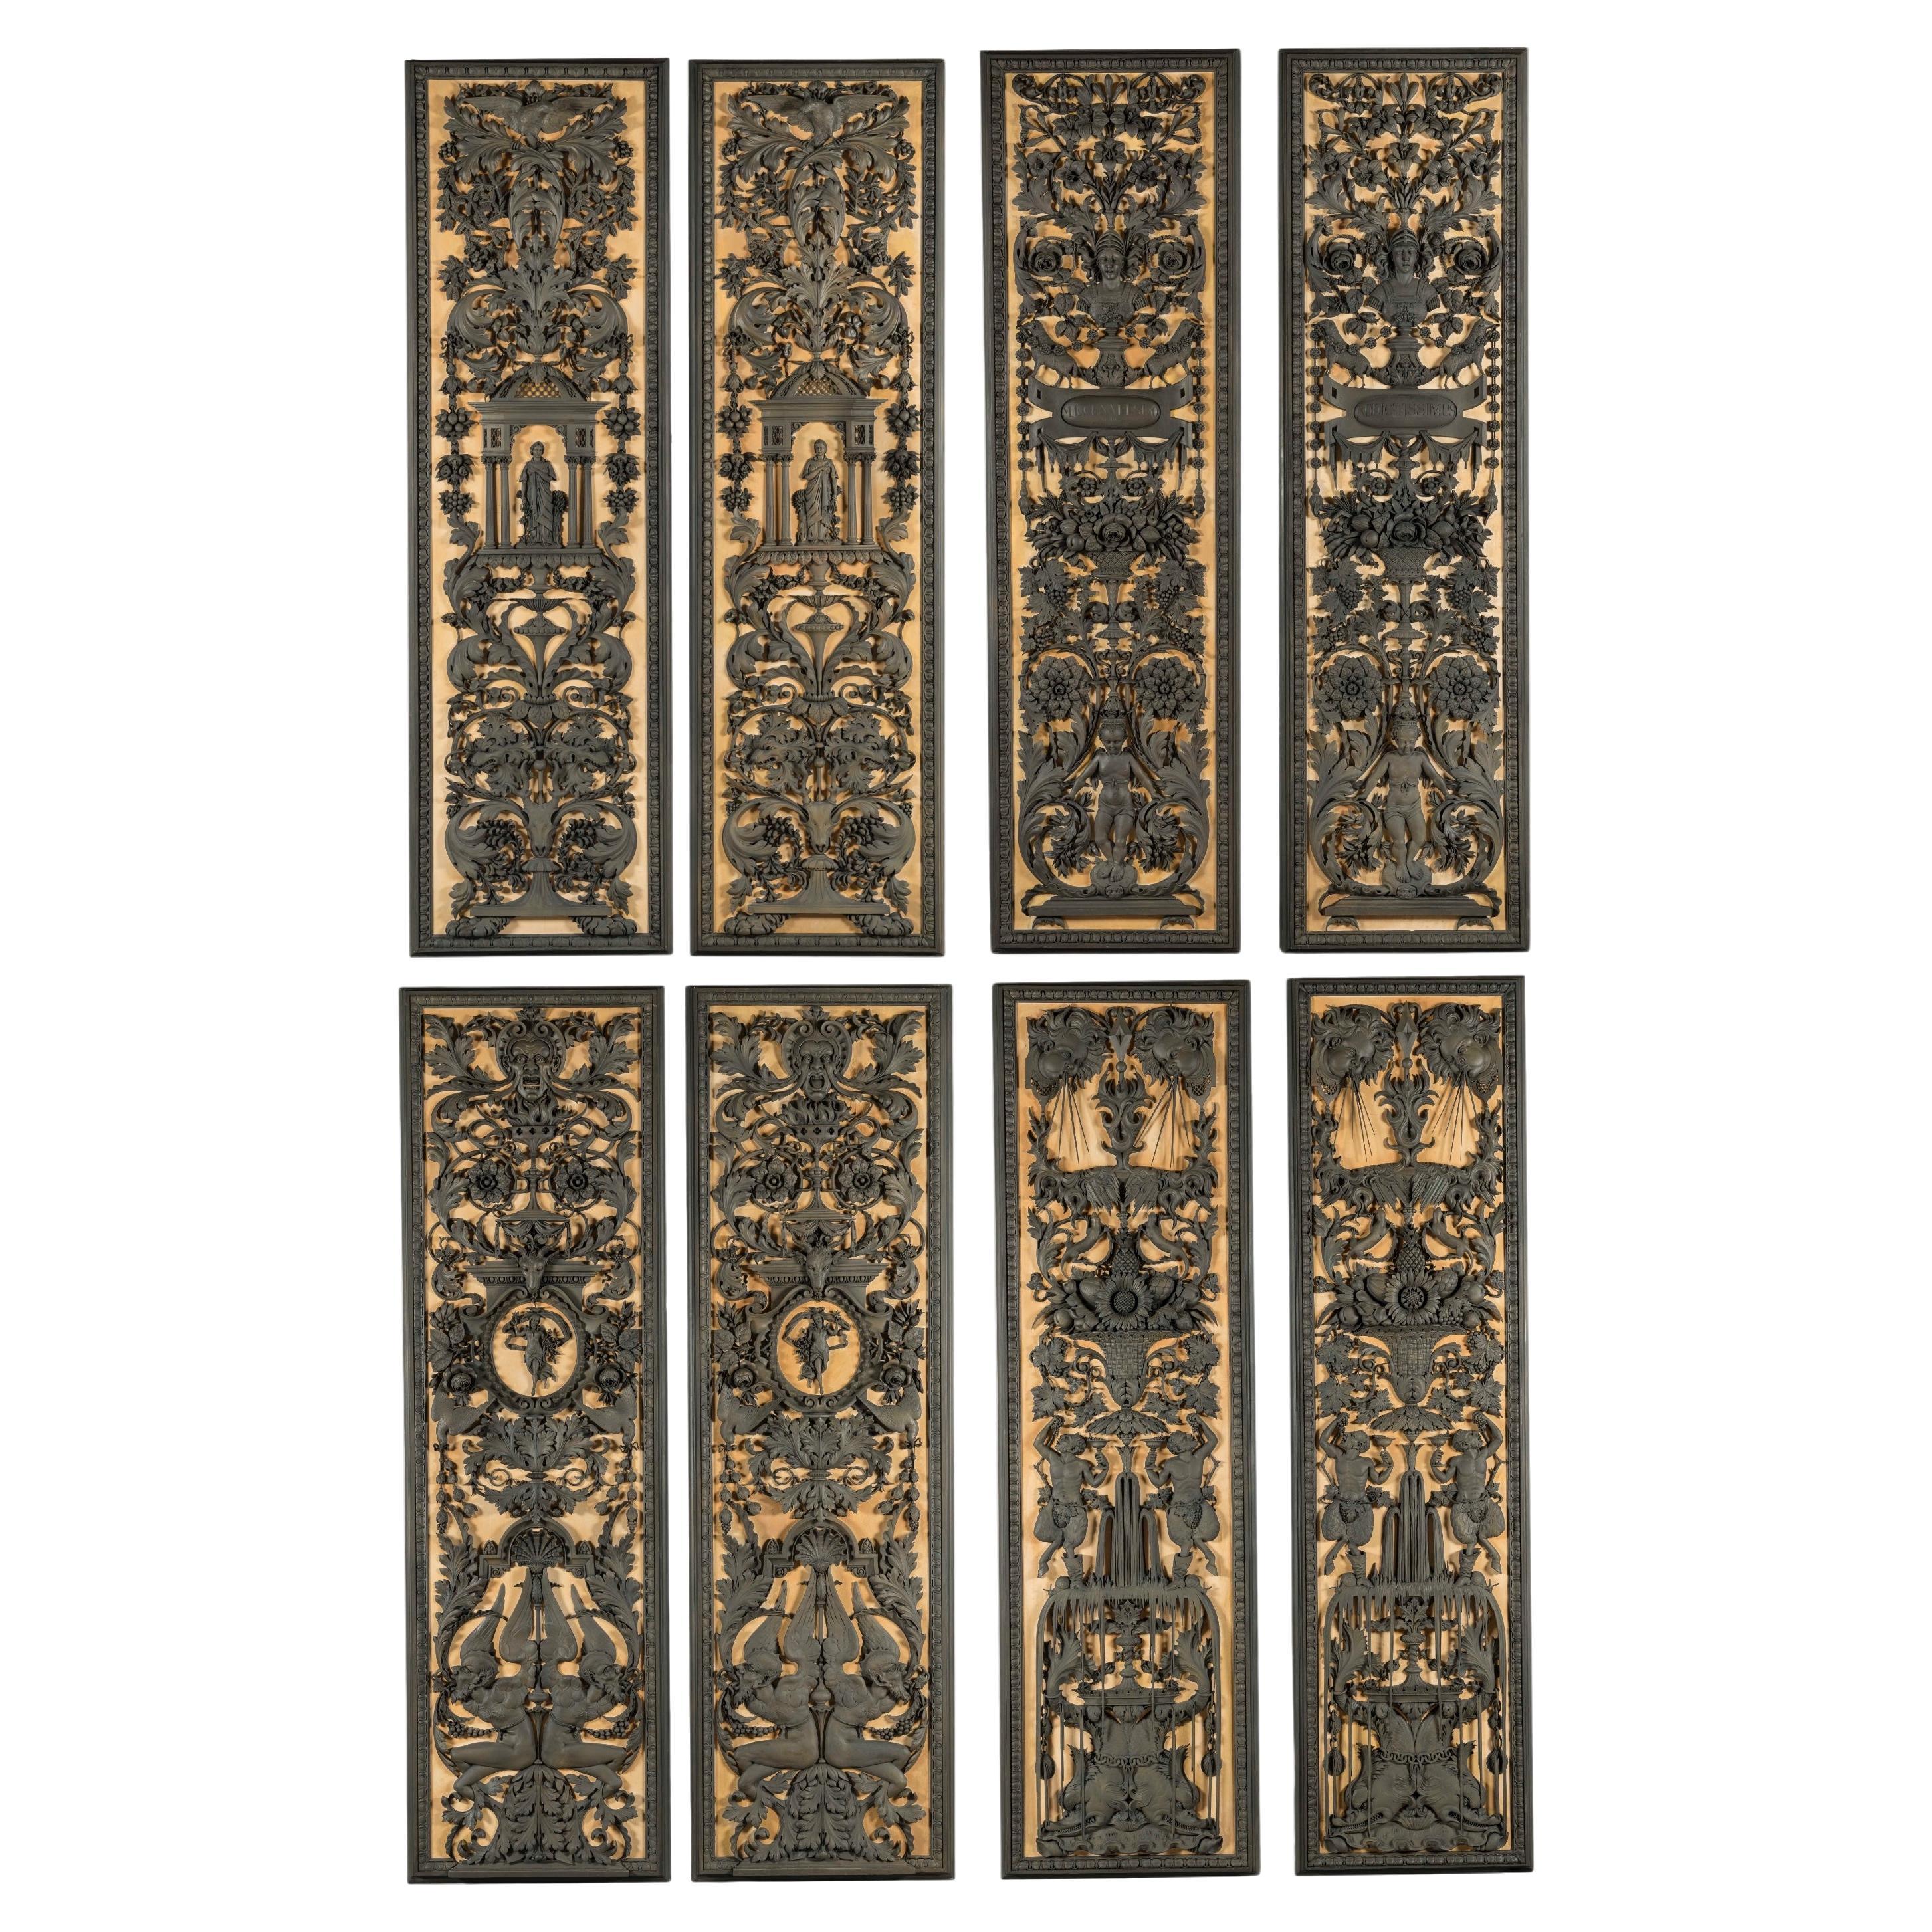 19th Century, Monumental Carved Boiserie Panels from Lartington Hall